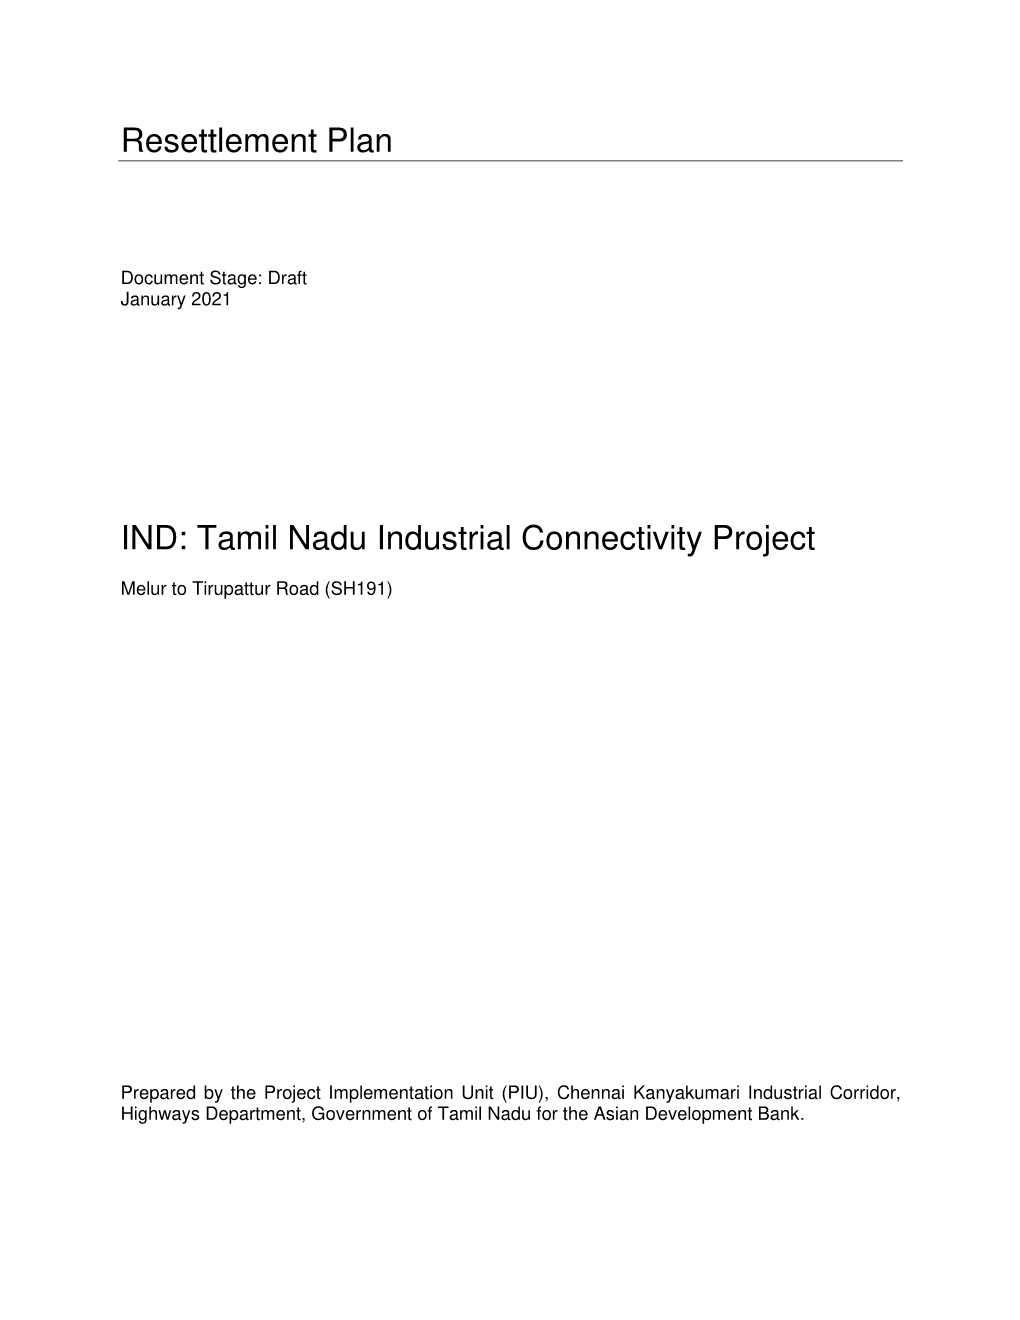 Tamil Nadu Industrial Connectivity Project: Melur to Tirupattur Road